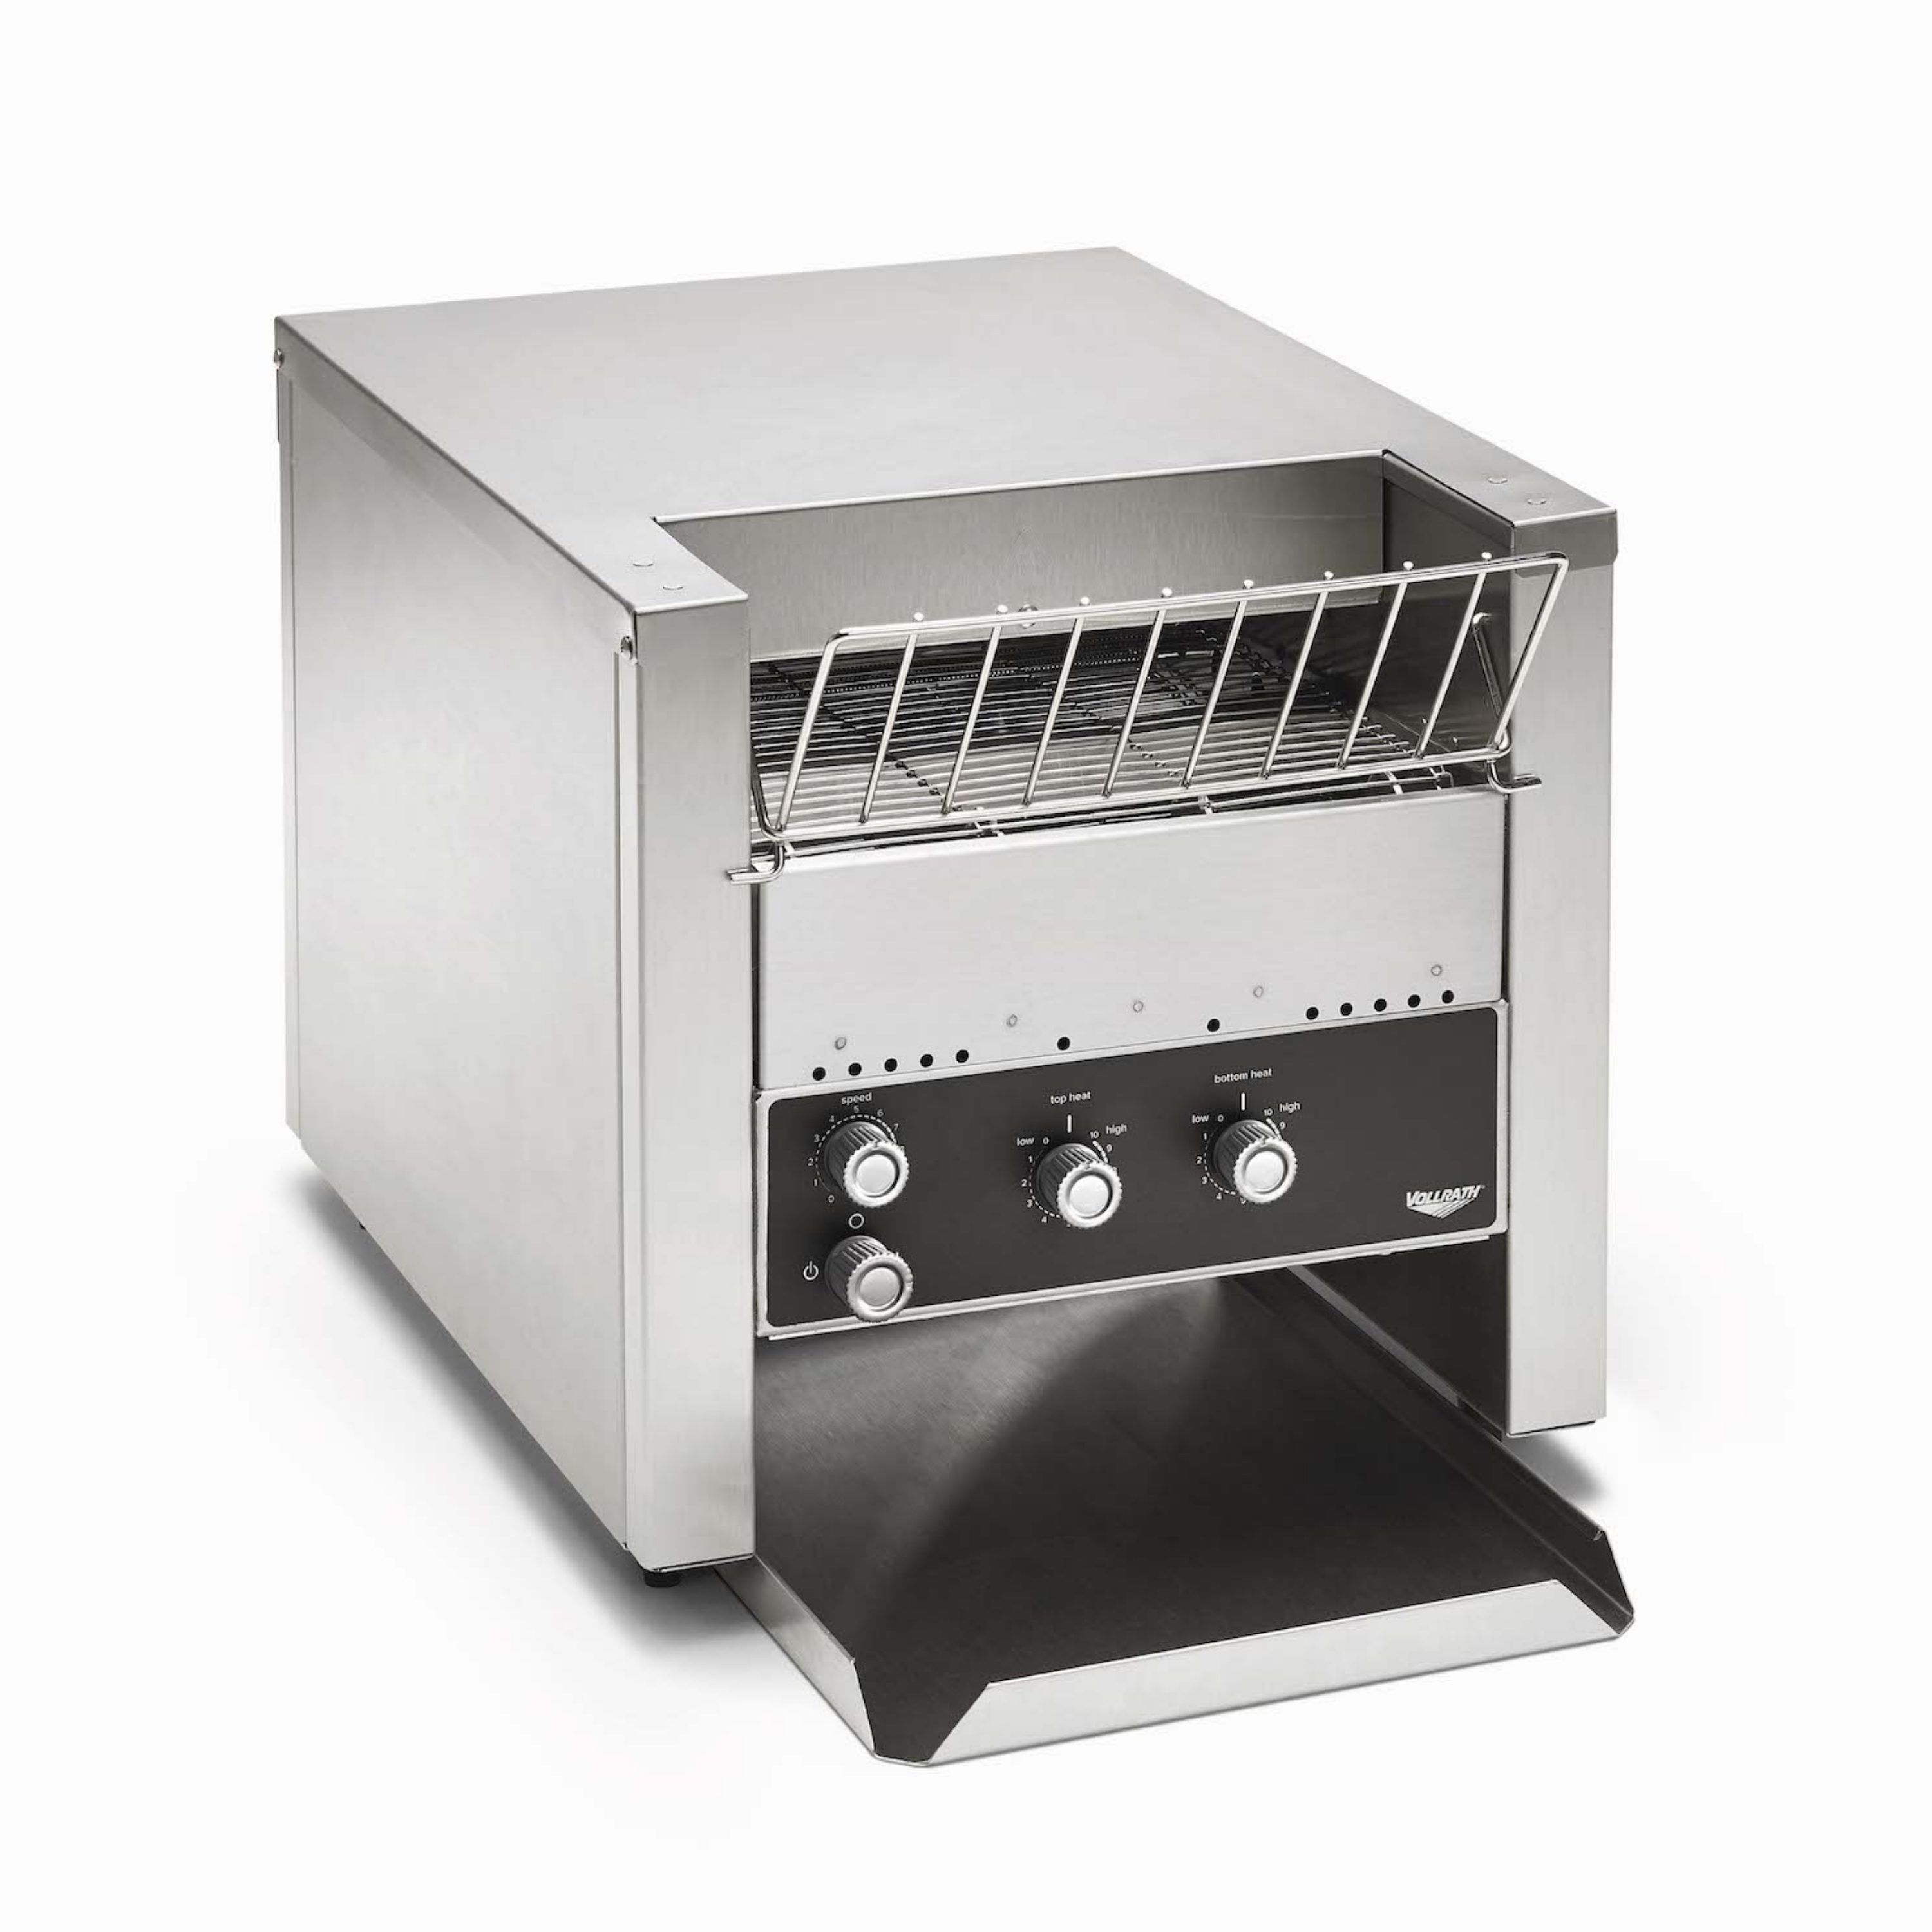 Hatco 4 Slice Pop-Up Toaster - 13 5/8L x 12 5/16W x 8 1/32H